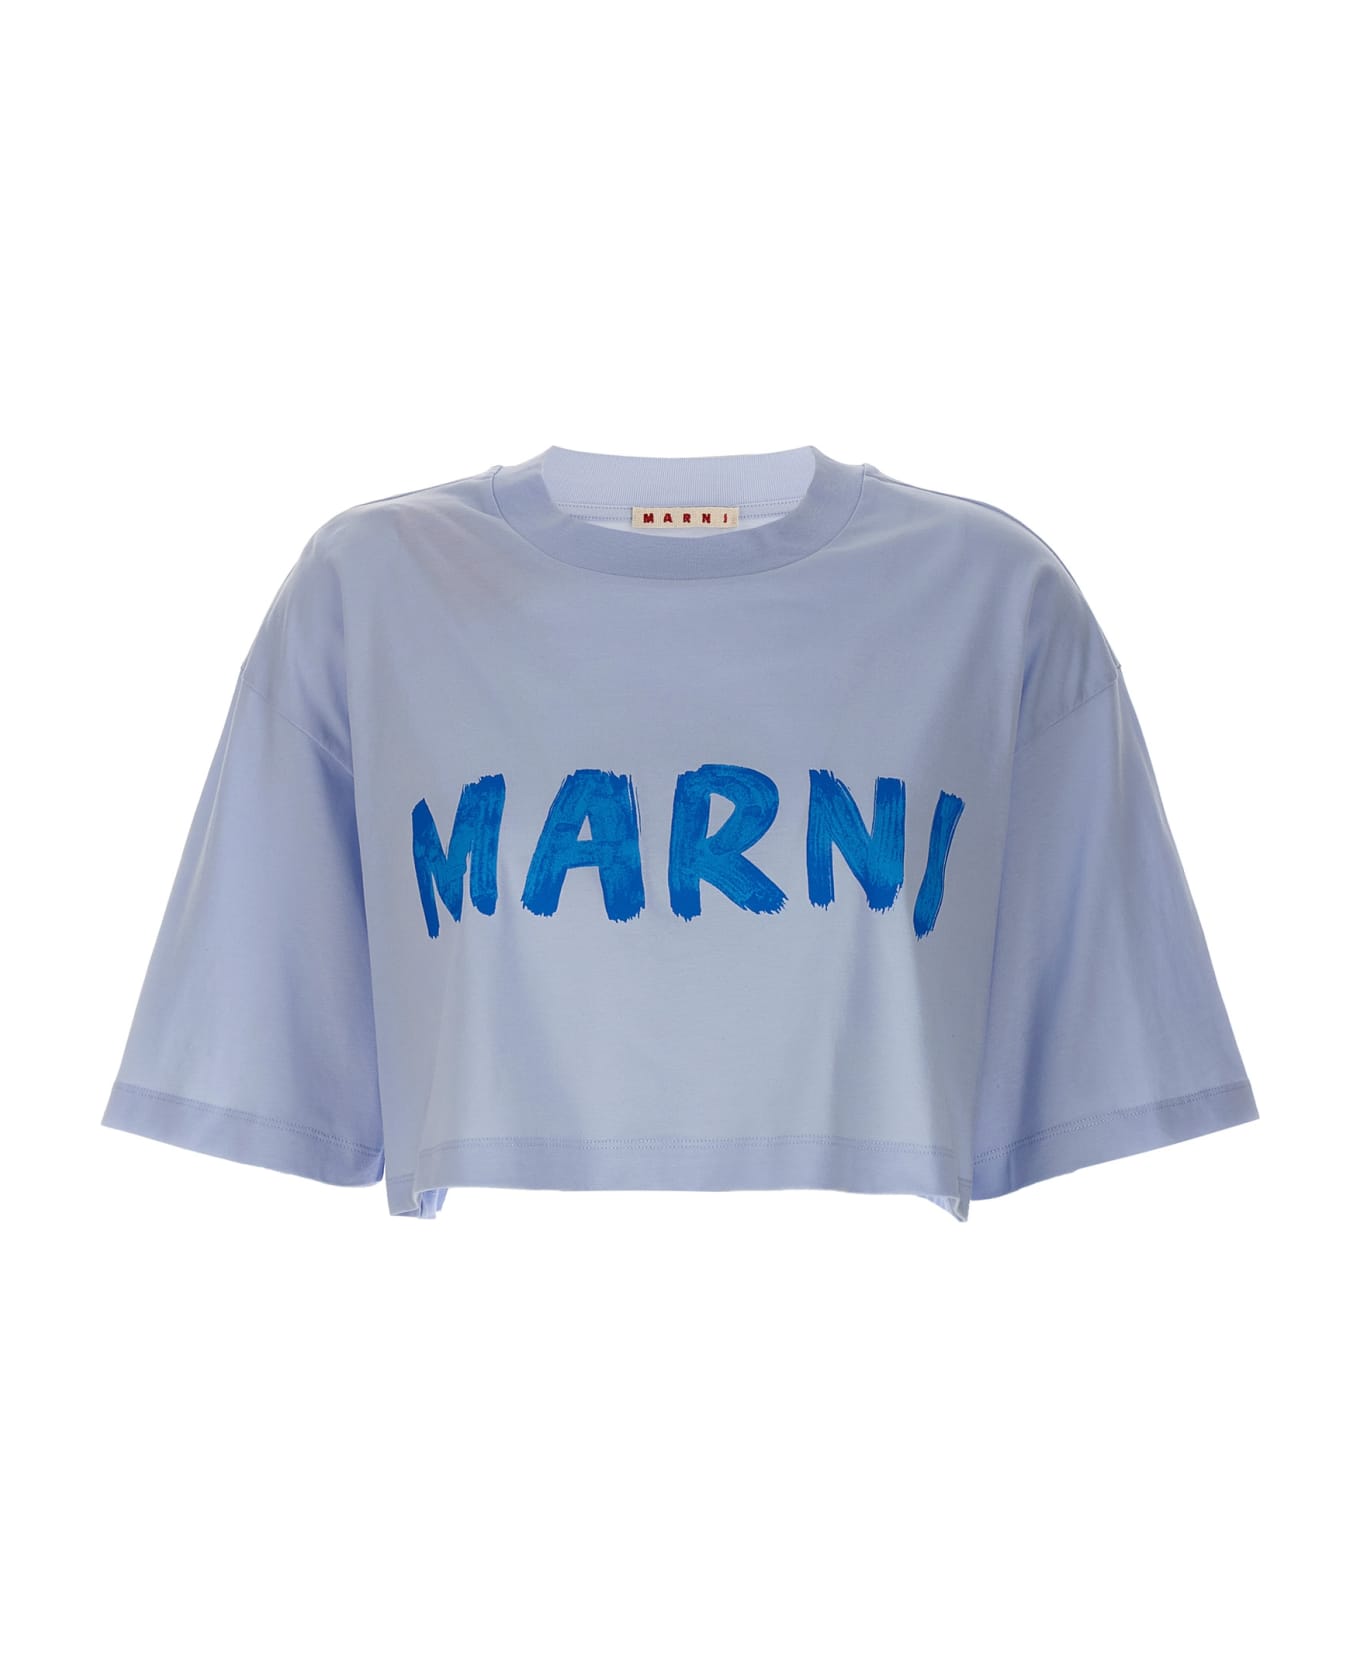 Marni Logo Print Cropped T-shirt - Azzurro/blu